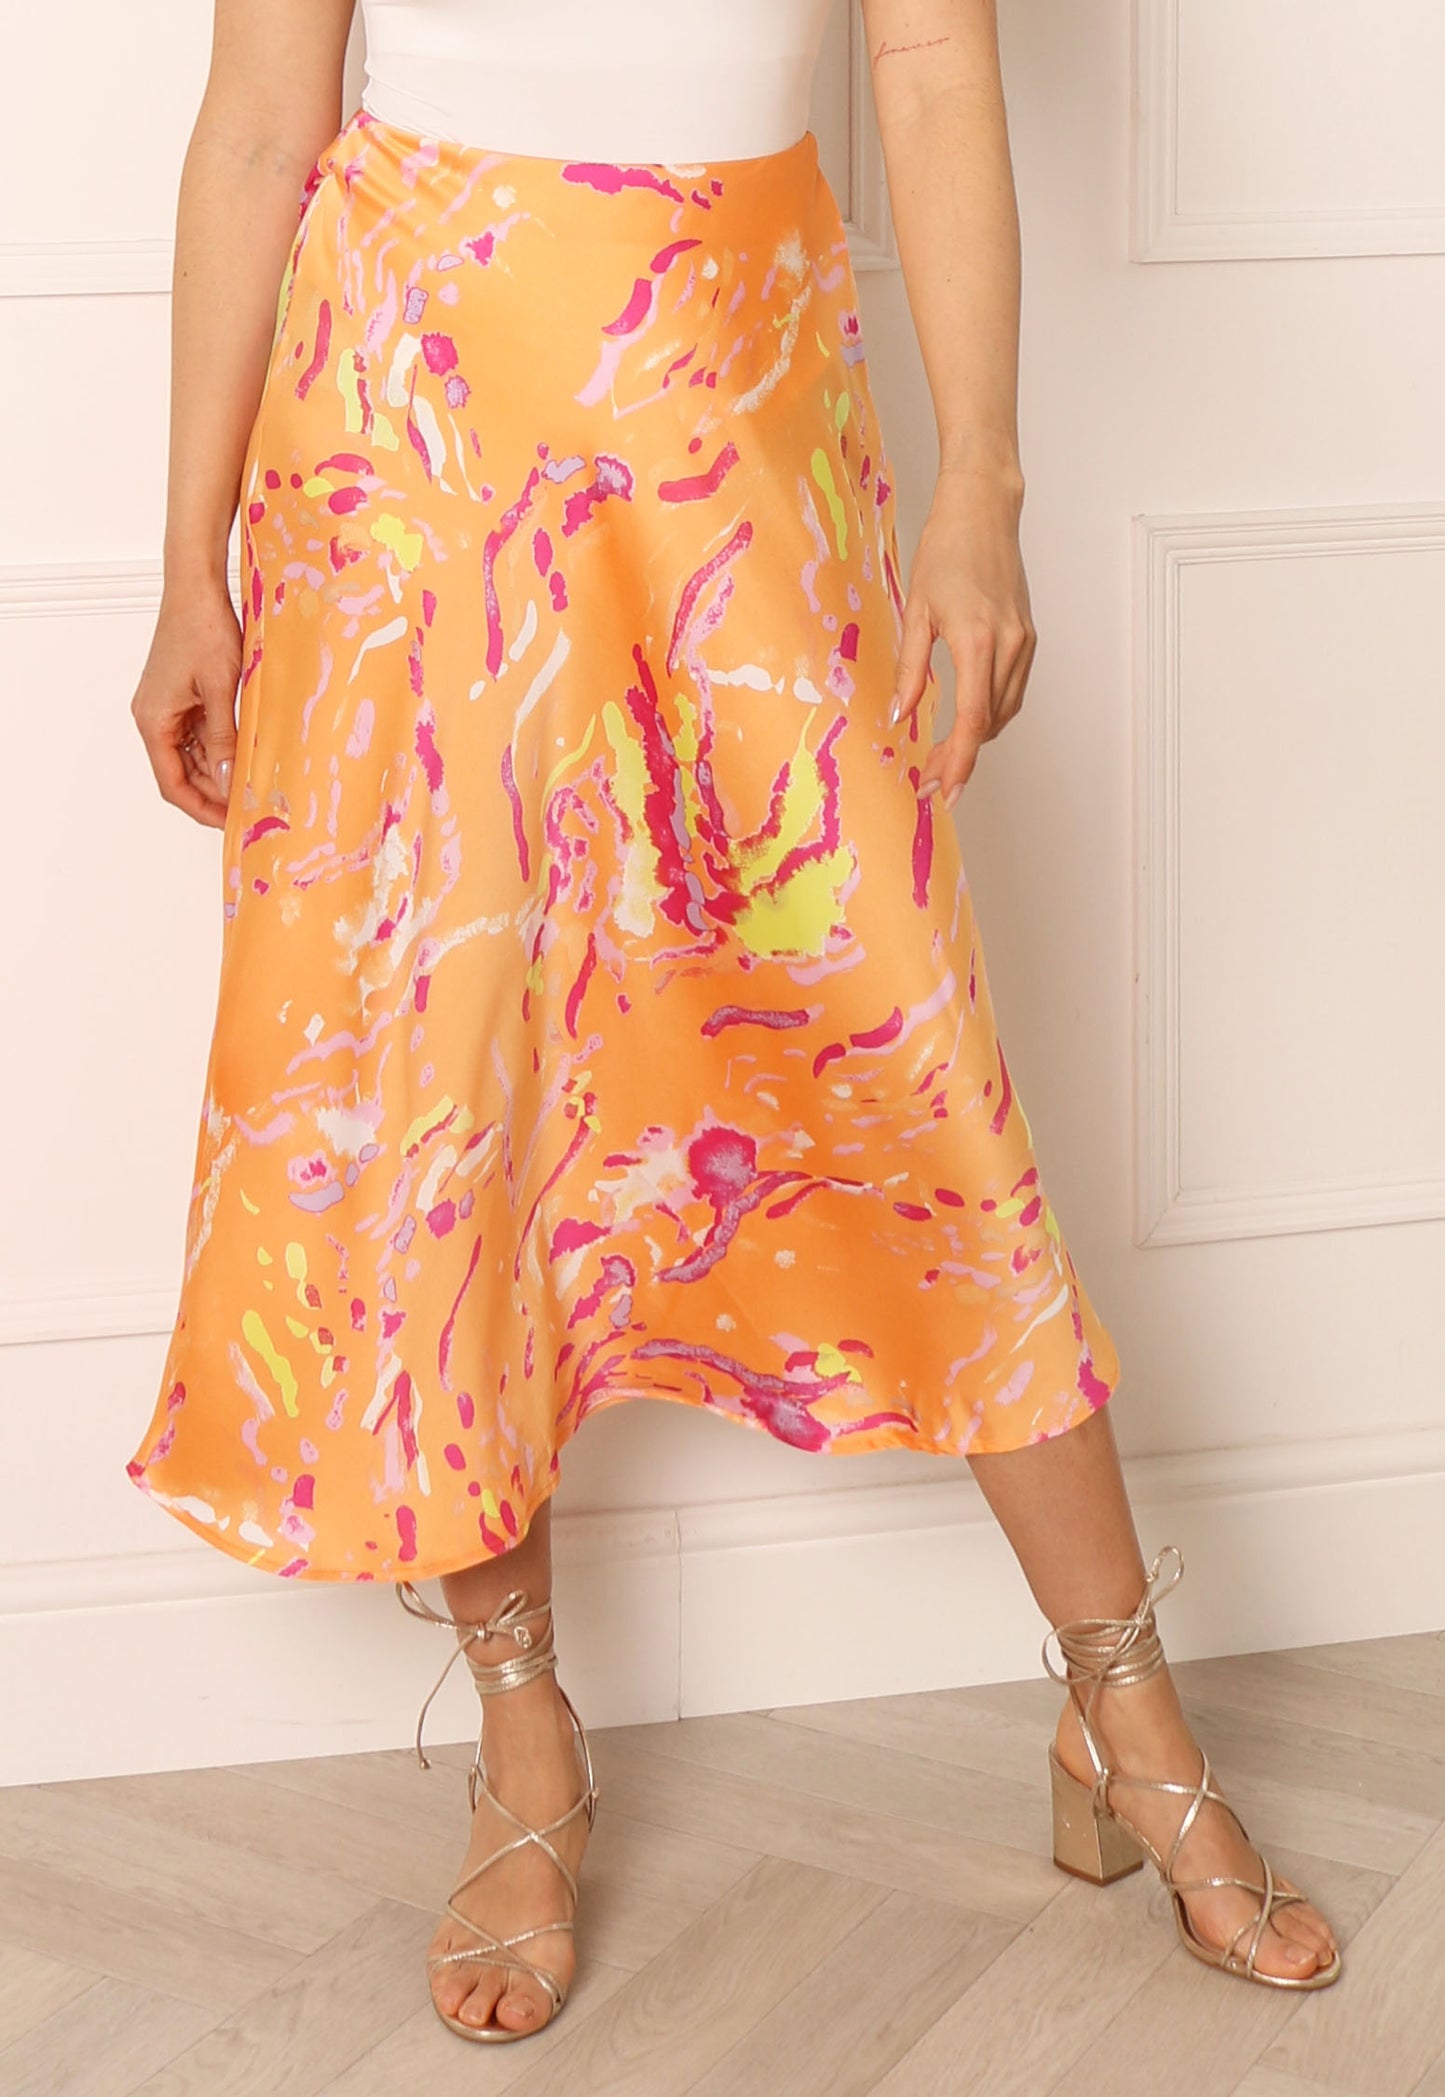 
                  
                    VERO MODA Heart Printed Bias Cut Satin Midi Slip Skirt in Orange & Pink Tones - One Nation Clothing
                  
                